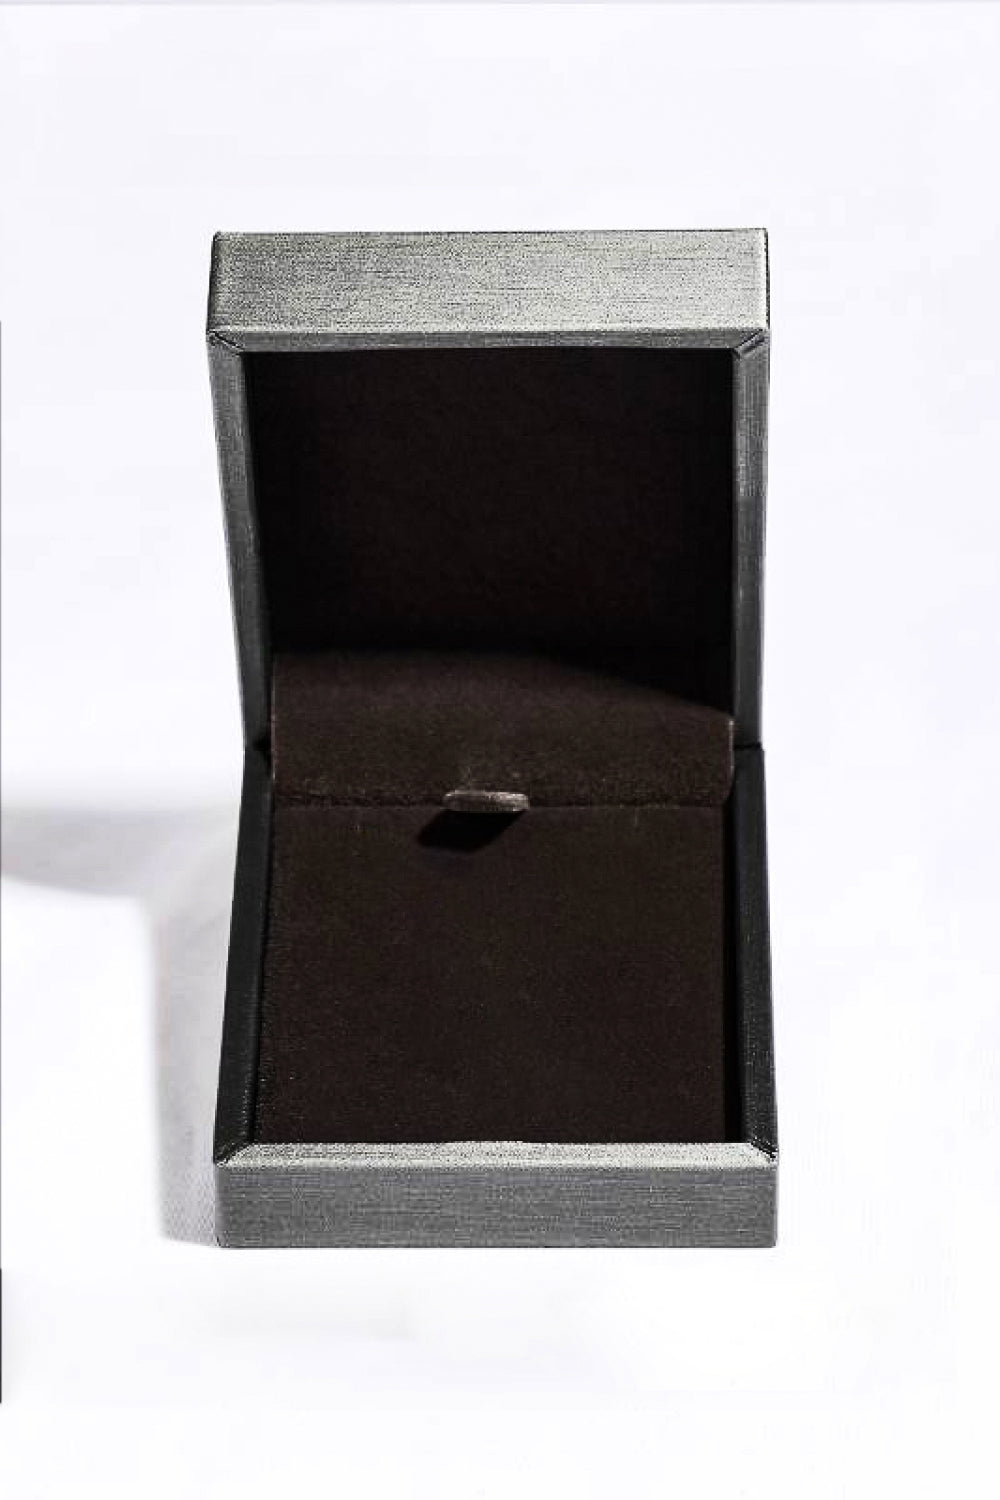 1 Carat Moissanite Square Pendant Chain Necklace (Platinum-Plated Fine Silver) - Sparkala